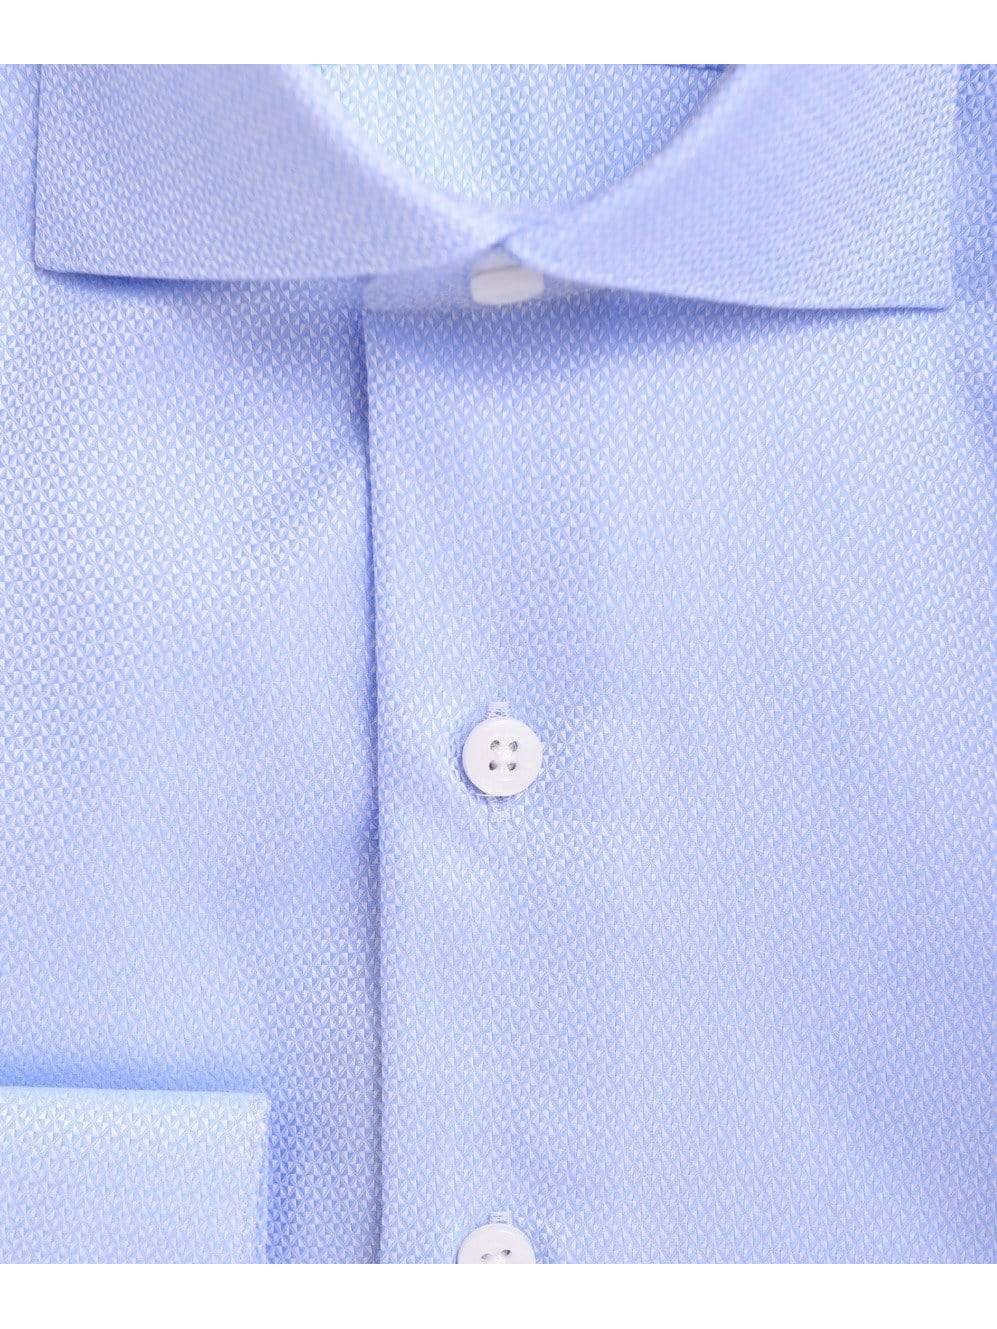 Proper Shirtings SHIRTS Mens Slim Fit Blue Textured Spread Collar Cotton Dress Shirt